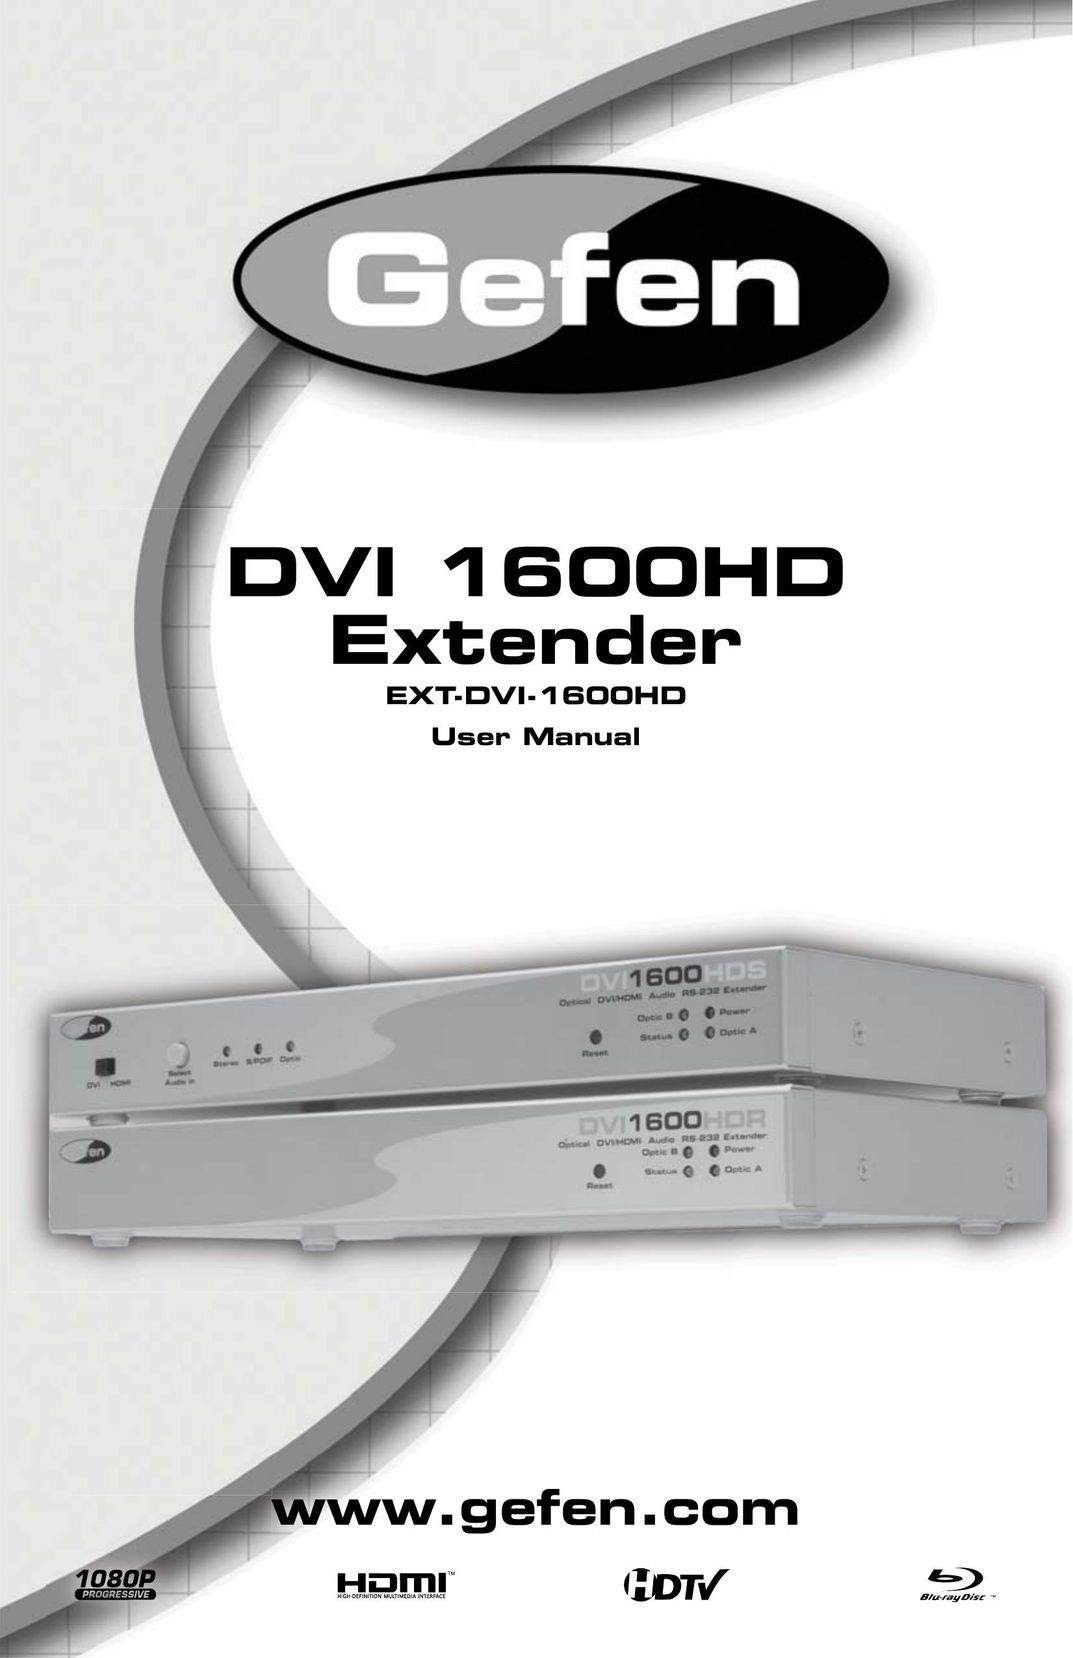 Gefen DVI 1600HD Network Router User Manual